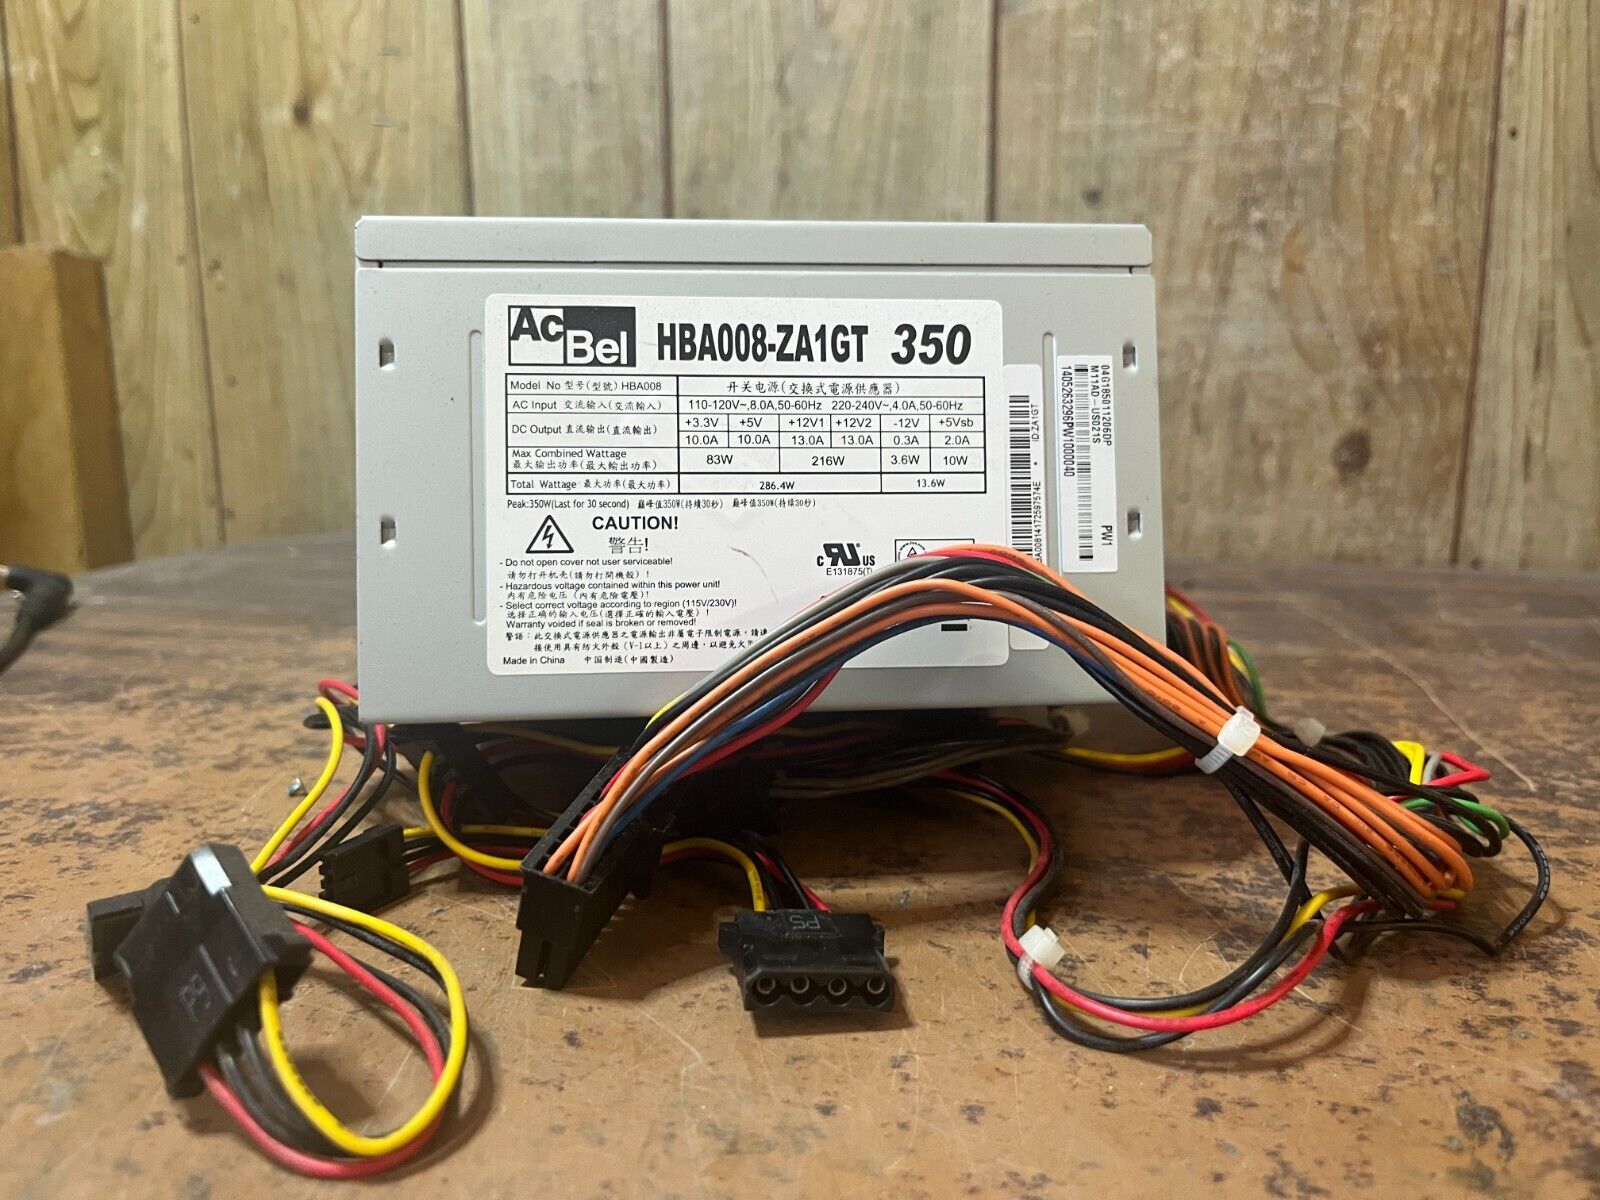 AcBel PowerSupply HBA008-ZA1GT 350 Watts Tested and Working